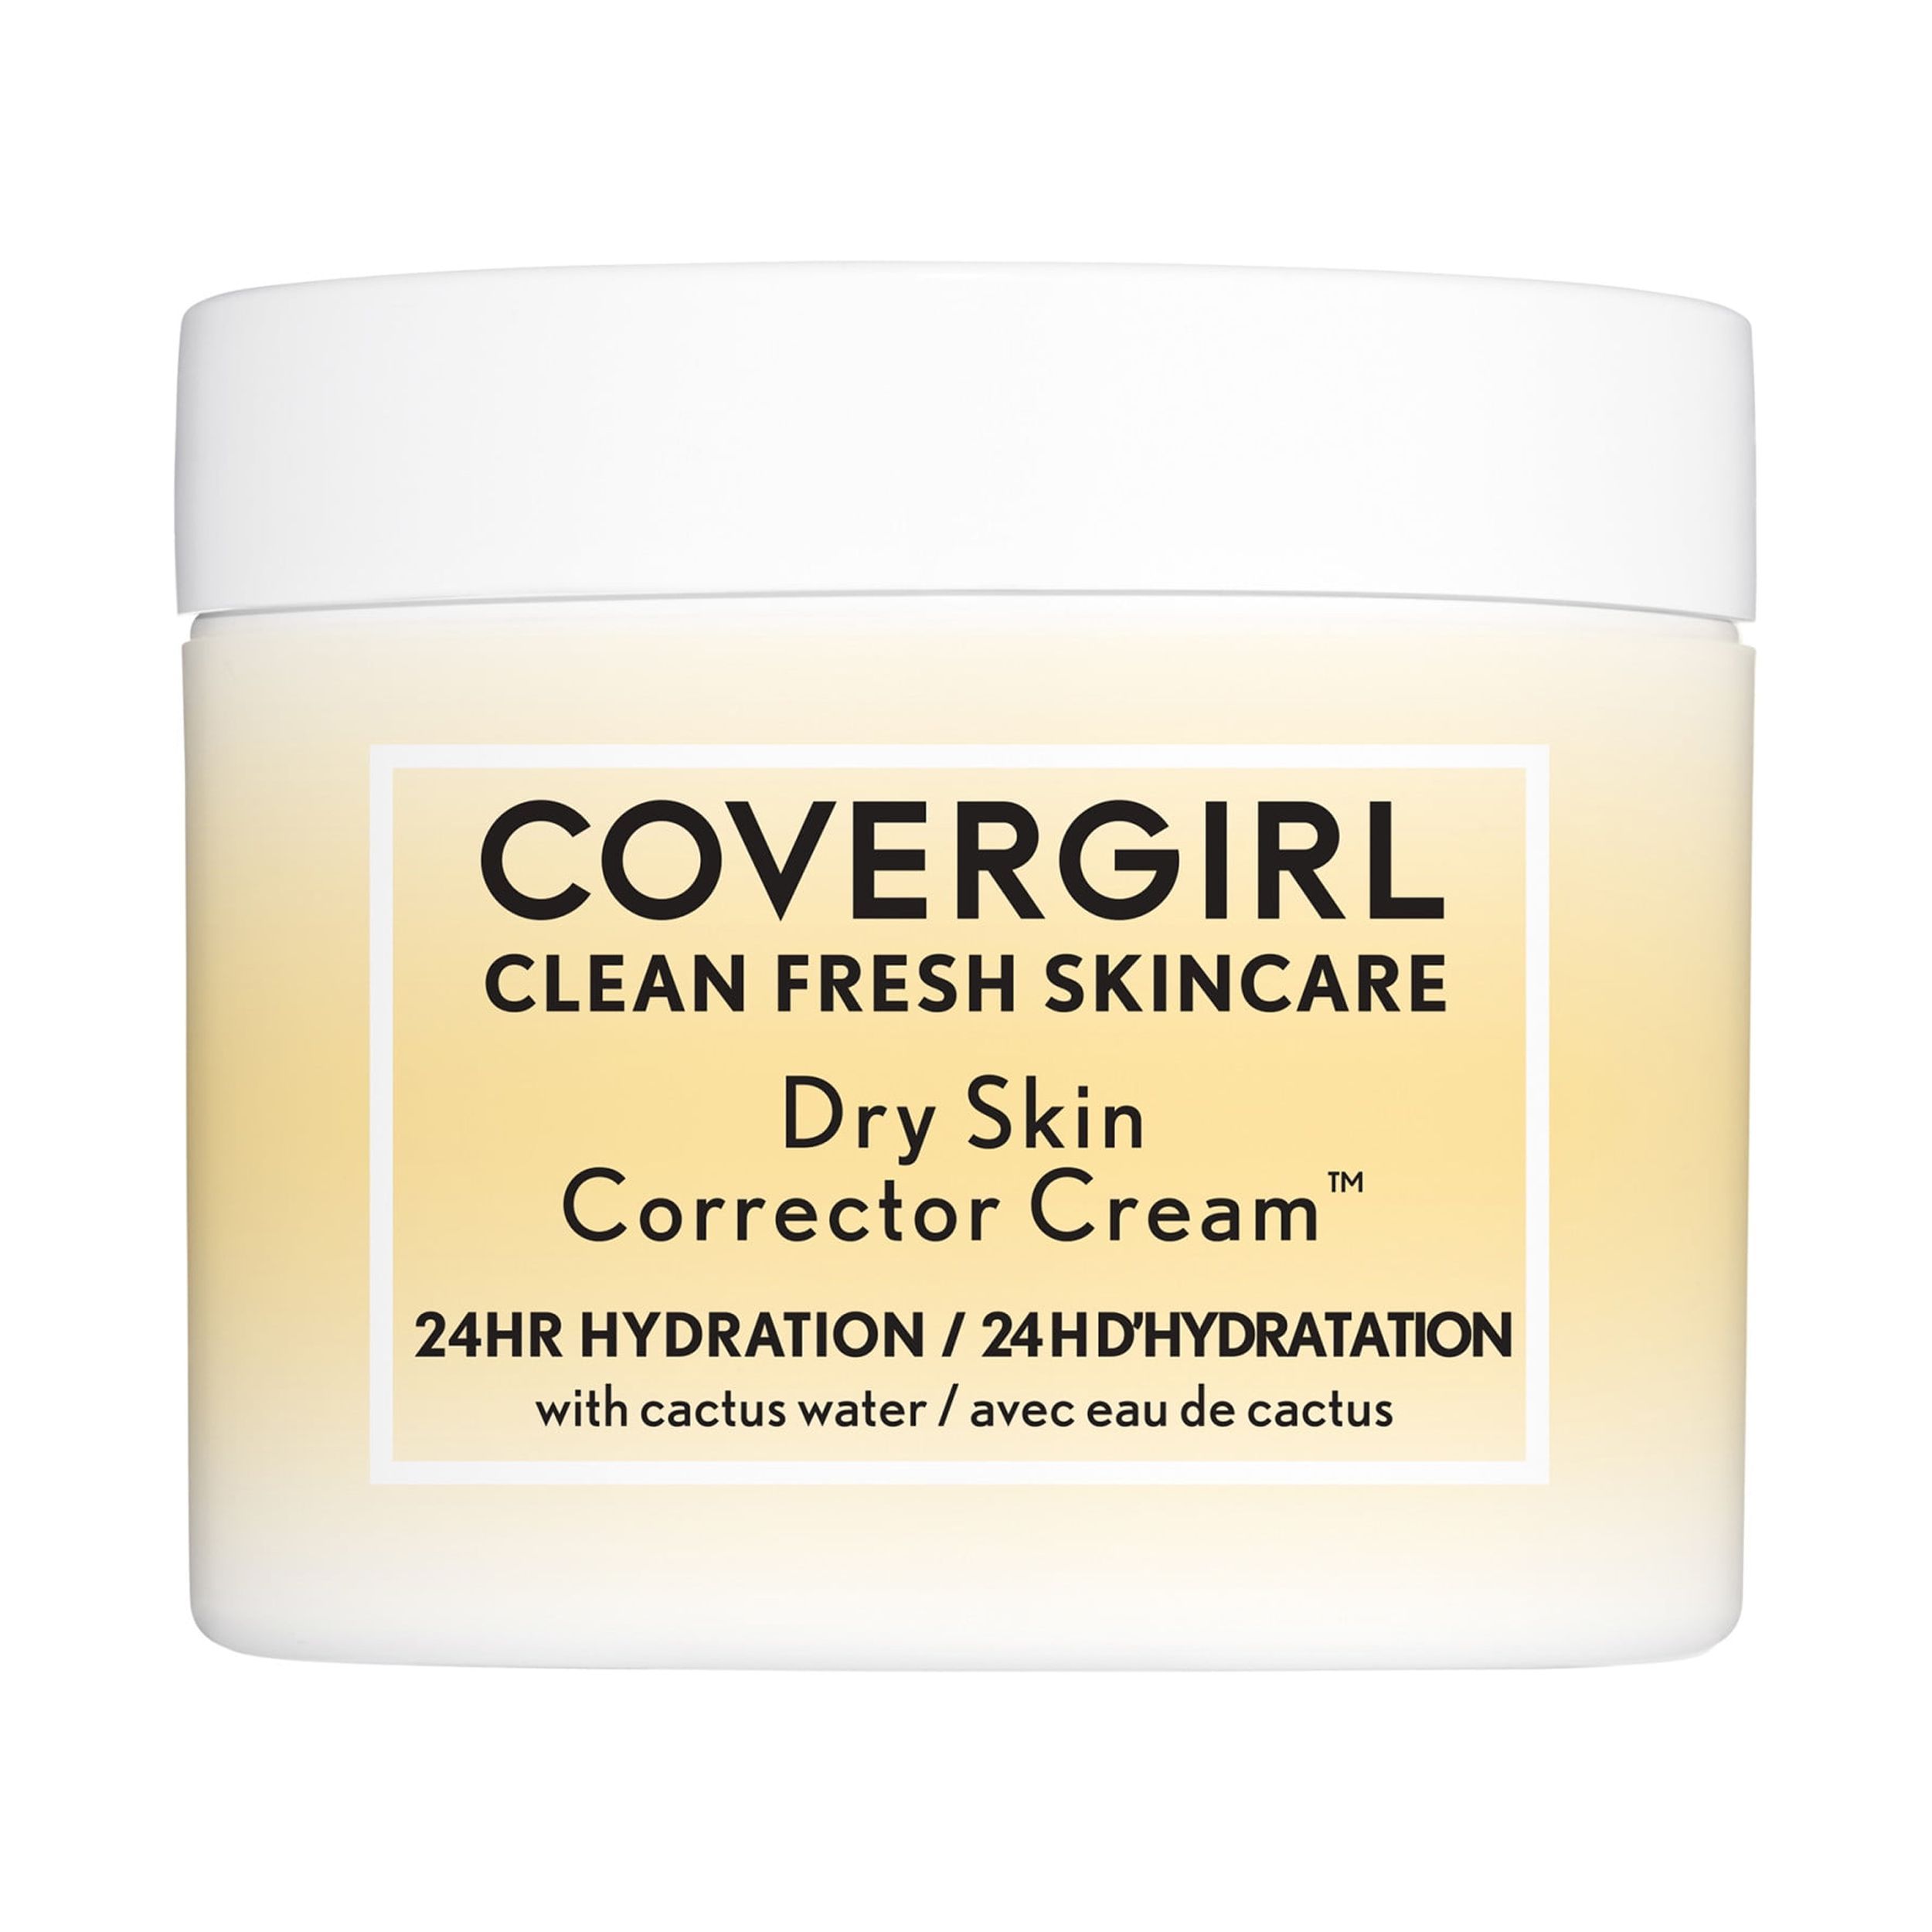 COVERGIRL Clean Fresh Skincare Dry Skin Corrector Face Cream, 2.0 fl oz - image 1 of 11